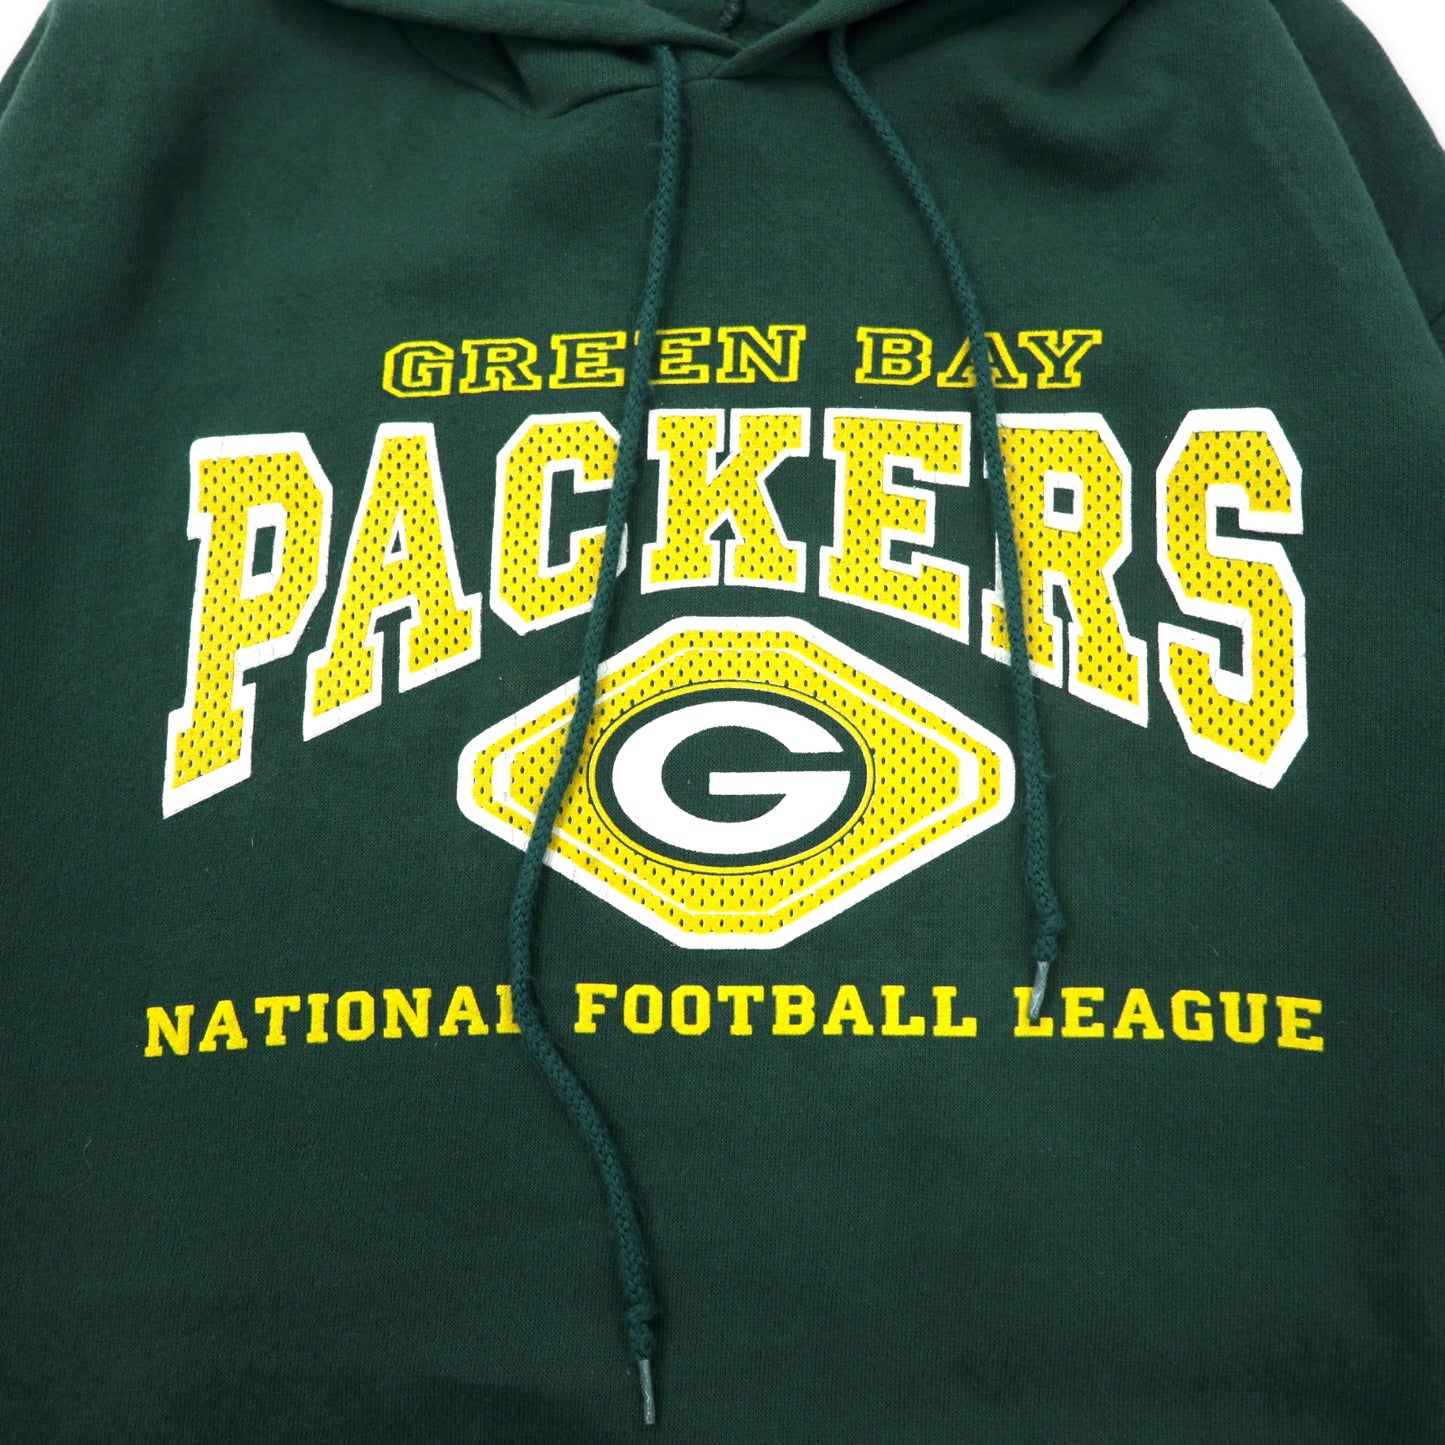 NFL Green Bay Packers フットボール プリントパーカー L グリーン コットン 裏起毛 パッカーズ ビッグサイズ メキシコ製